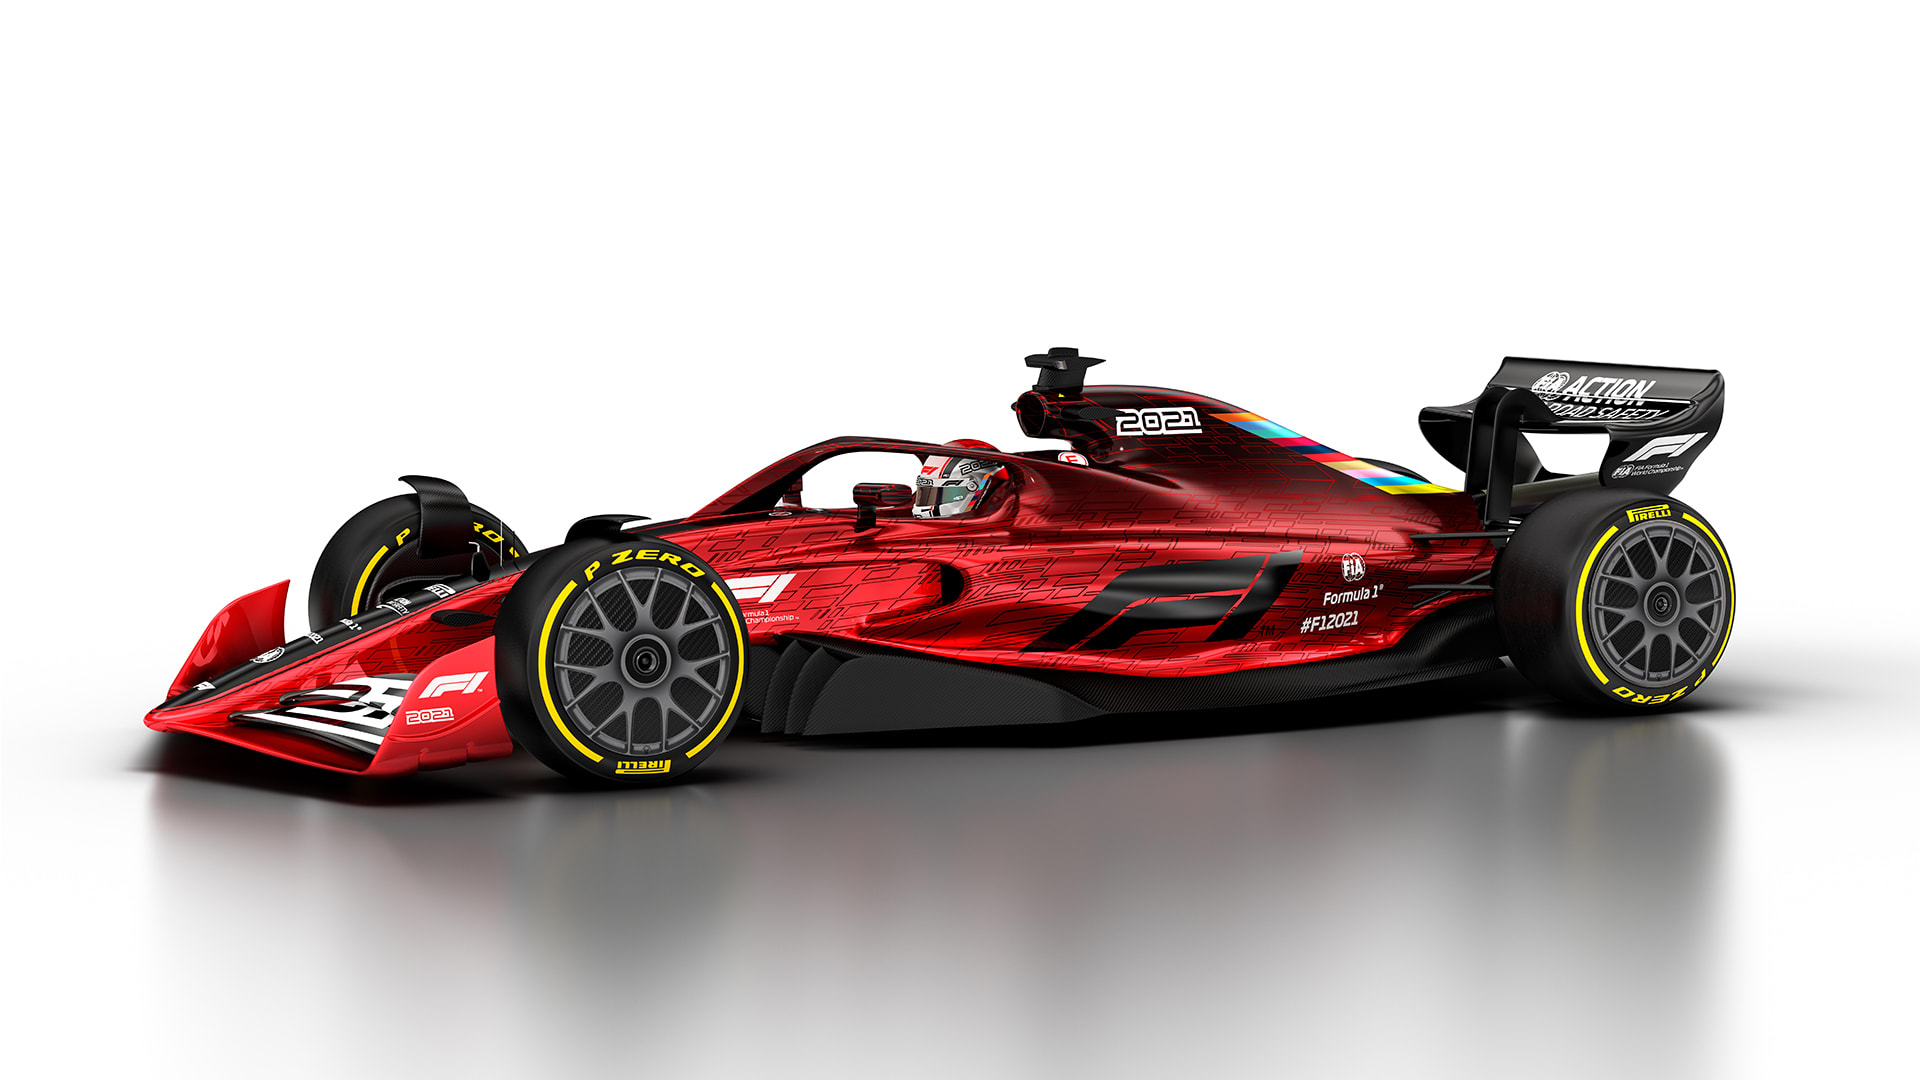 Formule 1 Auto 2021 2021 Formula 1 Car Revealed As Fia And F1 Present Regulations For The Future Formula 1